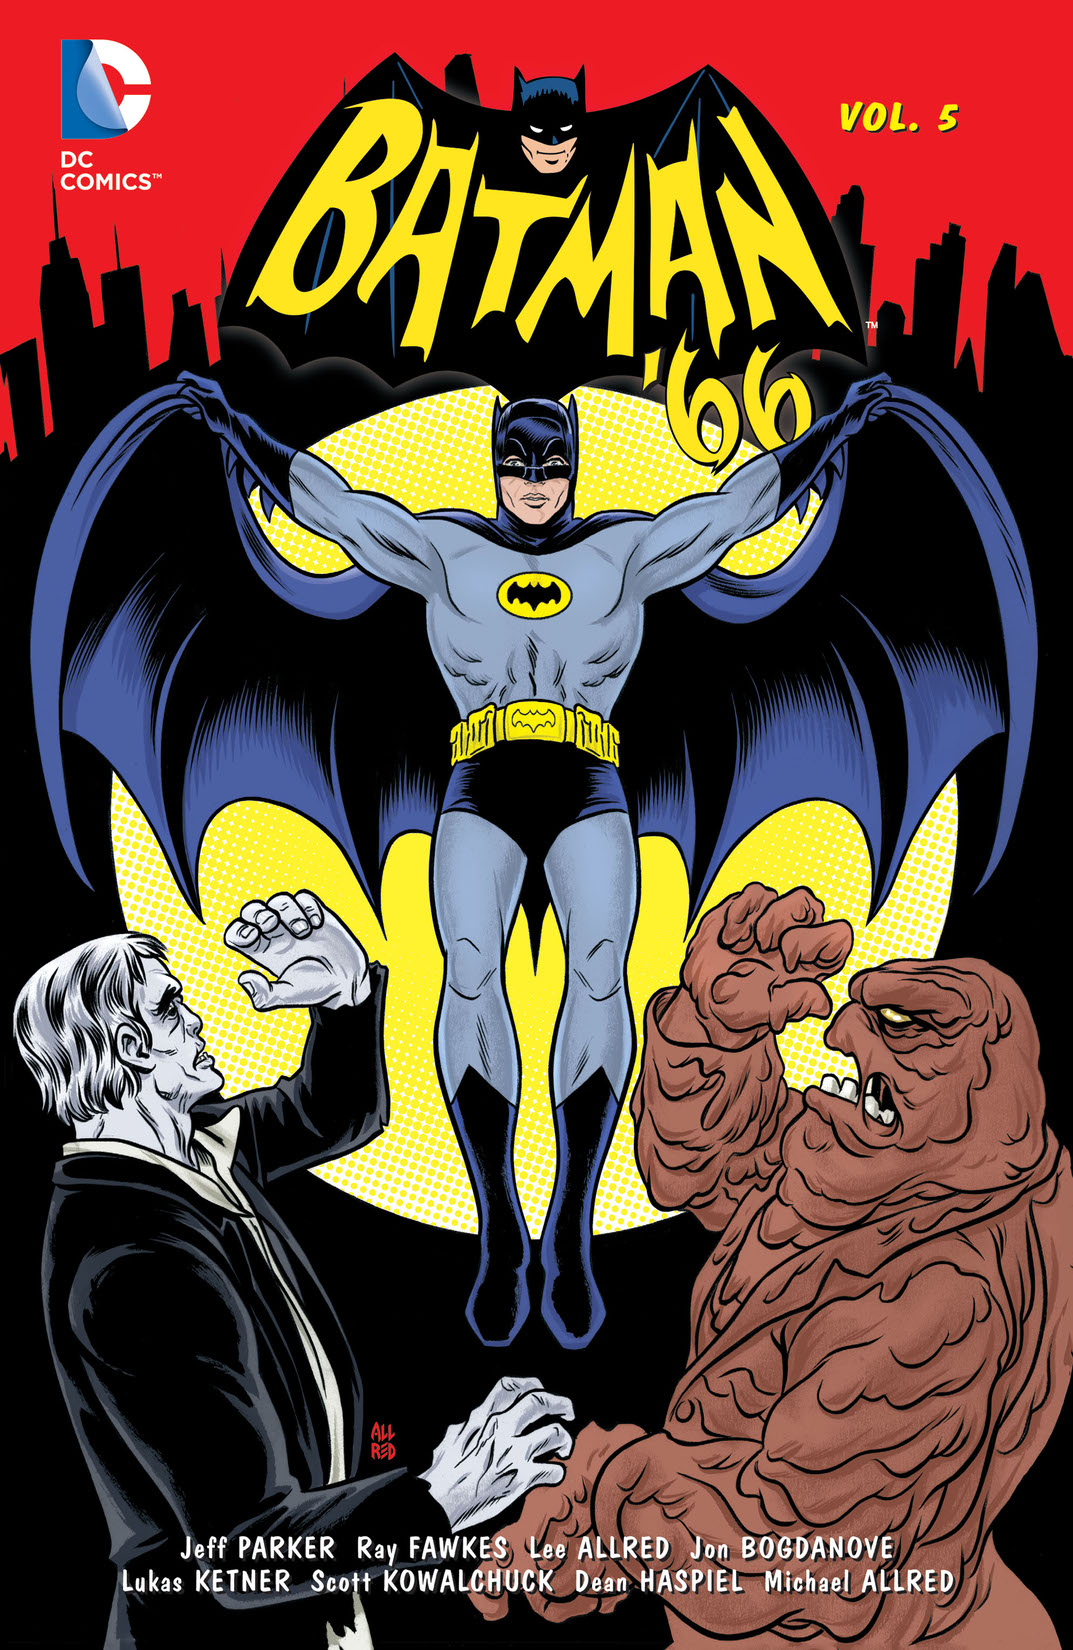 Batman '66 Vol. 5 preview images